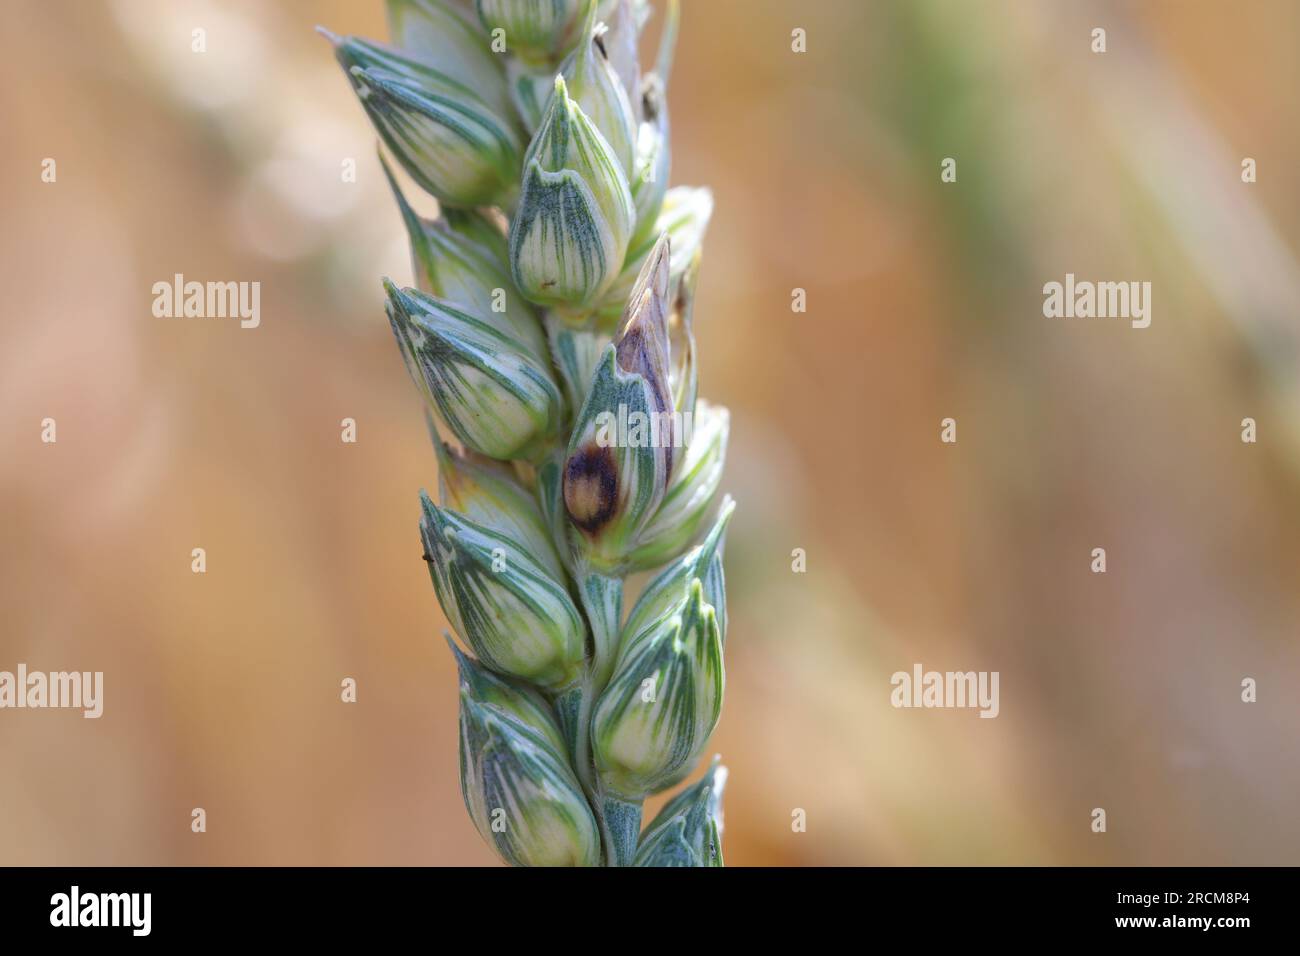 Glume blotch (Phaeosphaeria nodorum, Septoria glumarum) infetta orecchio di grano. Malattia dell'orecchio dei cereali. Foto Stock